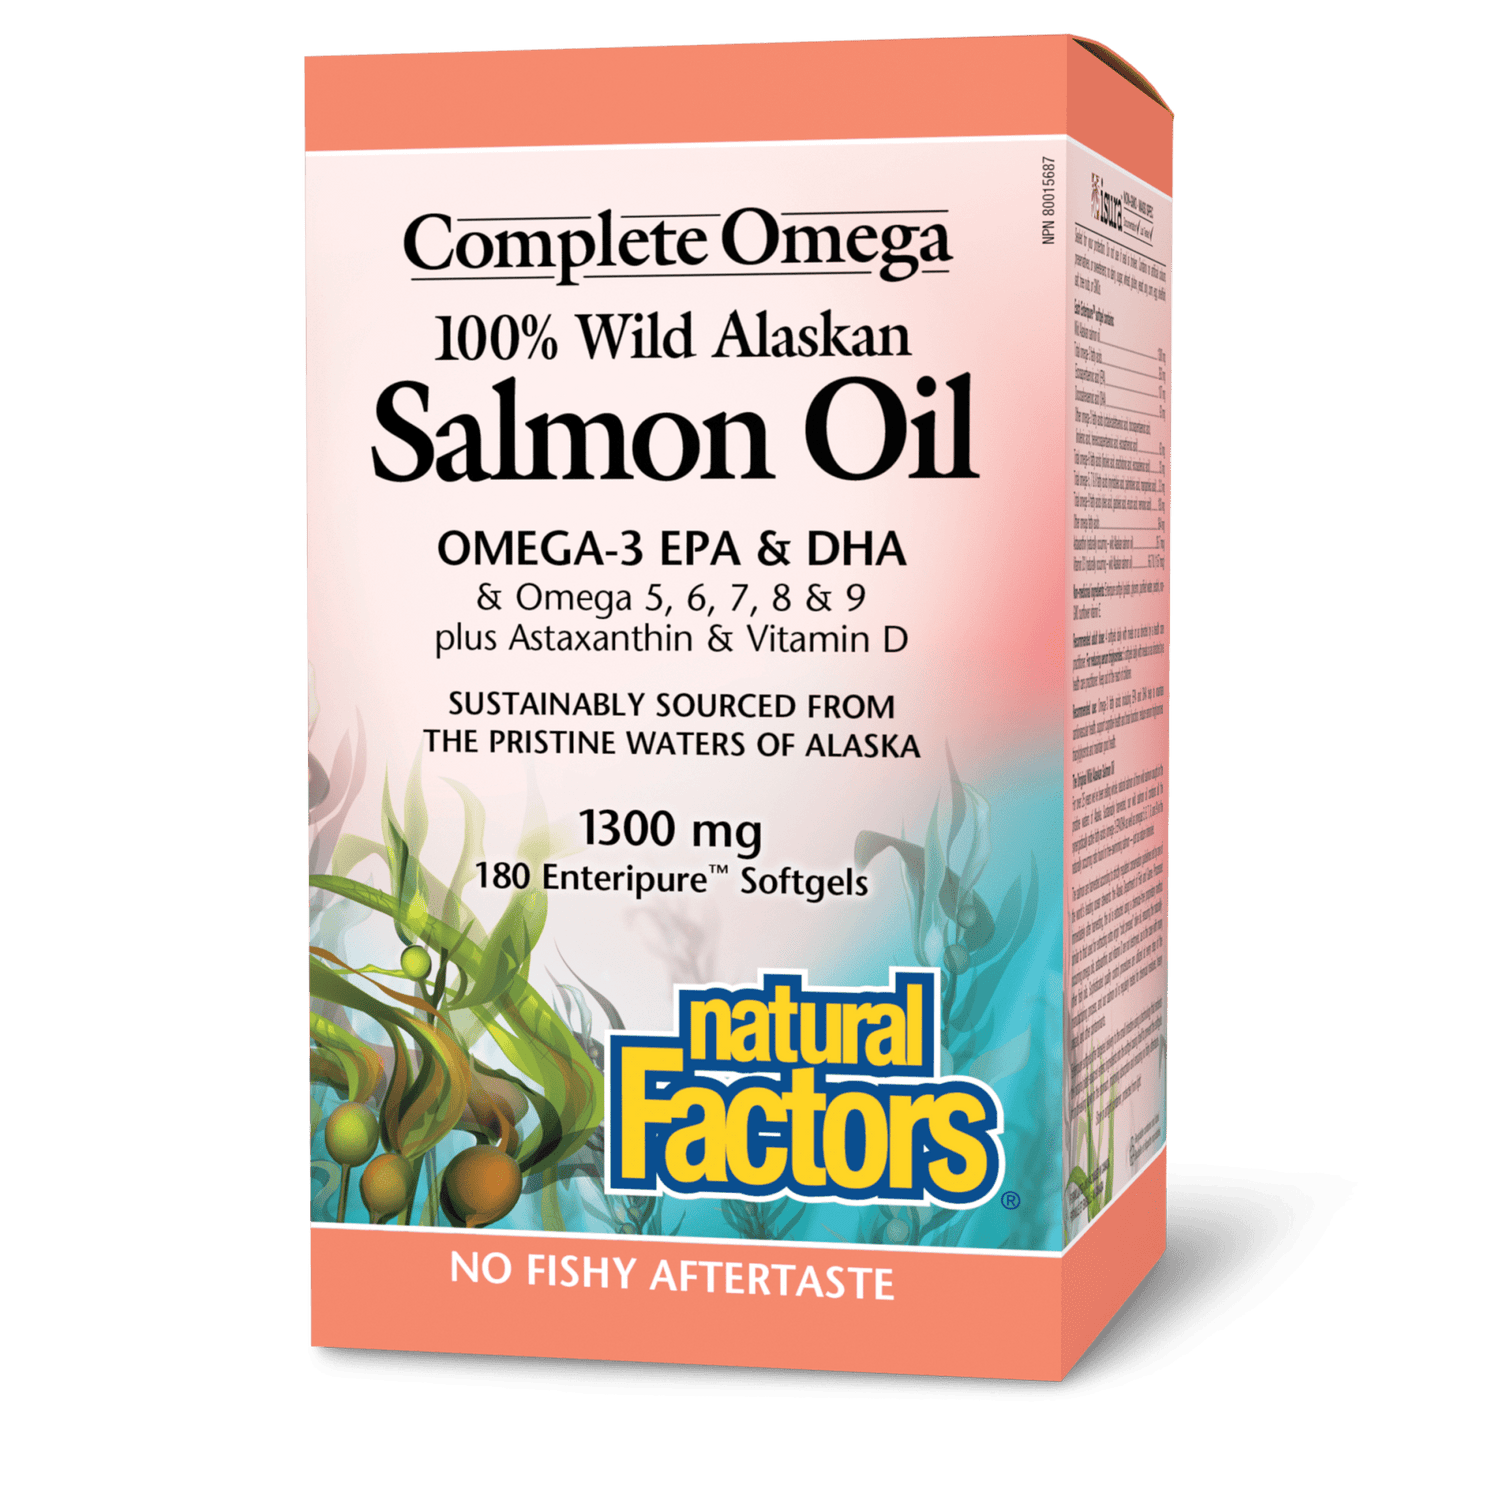 100% Wild Alaskan Salmon Oil 1300 mg, Complete Omega, Natural Factors|v|image|2266